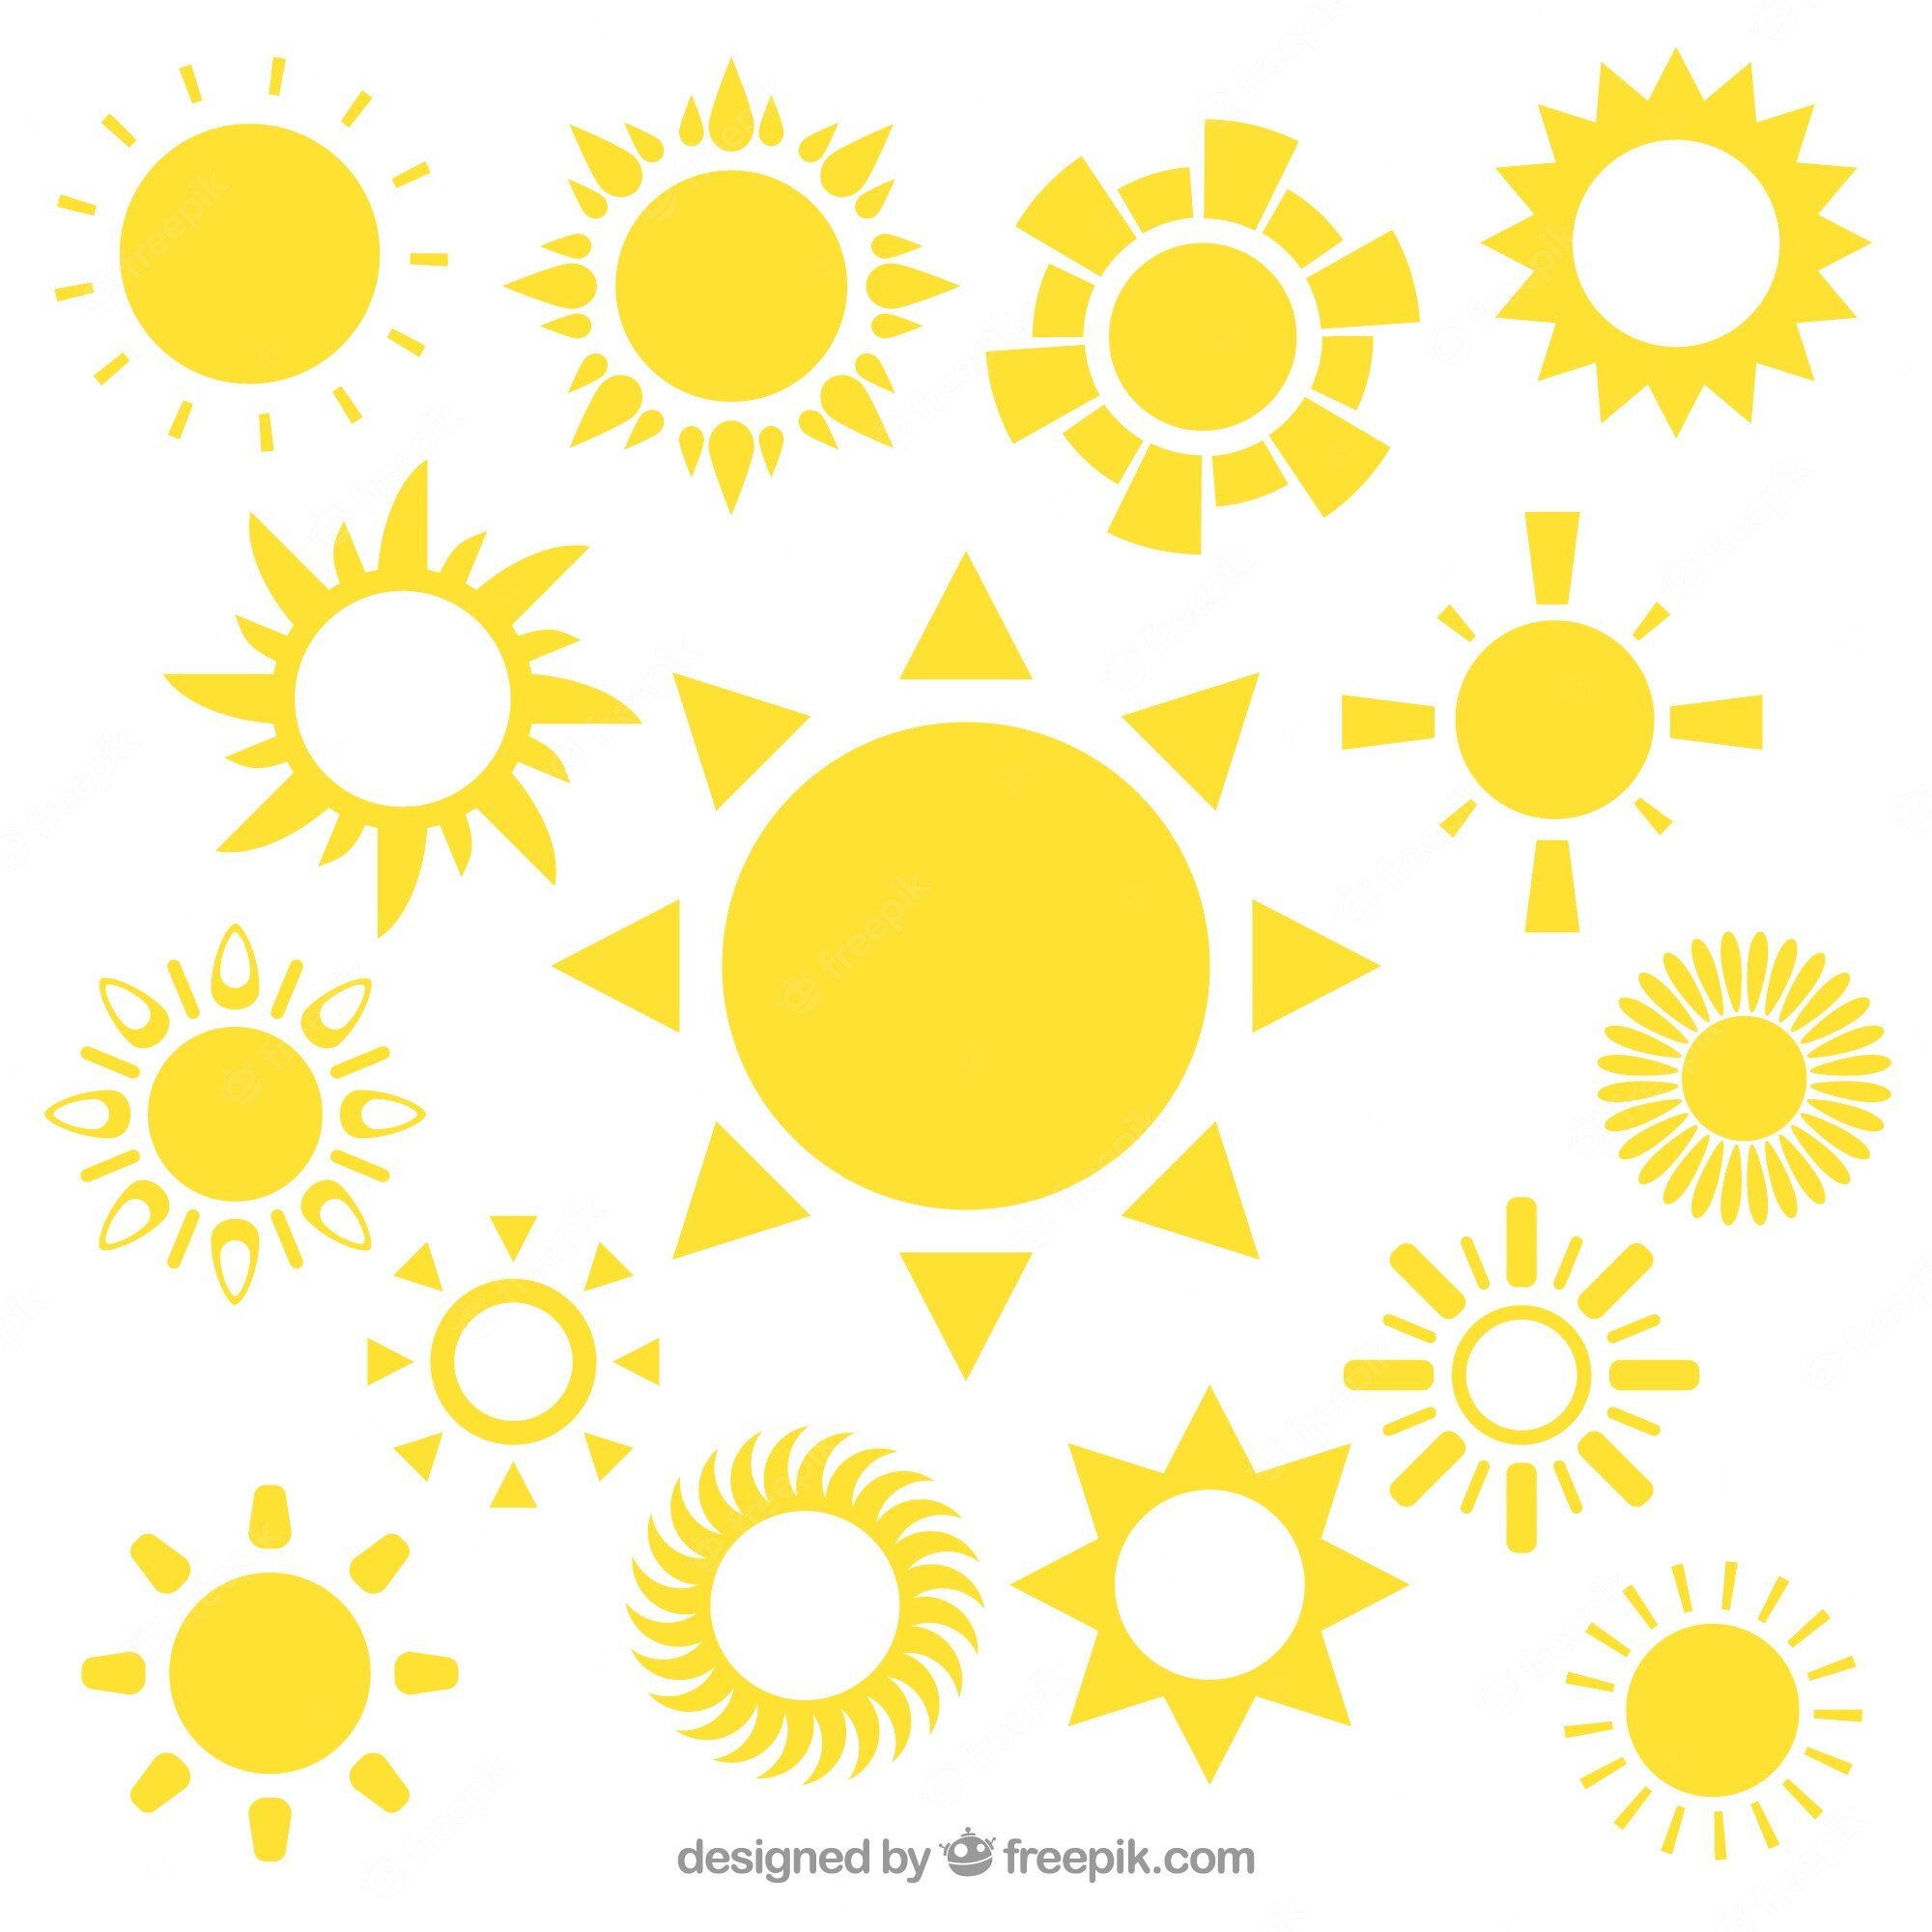 Солнышко вектор. Желтое солнце. Солнце векторный рисунок. Солнце логотип. Солнышко рисунок.